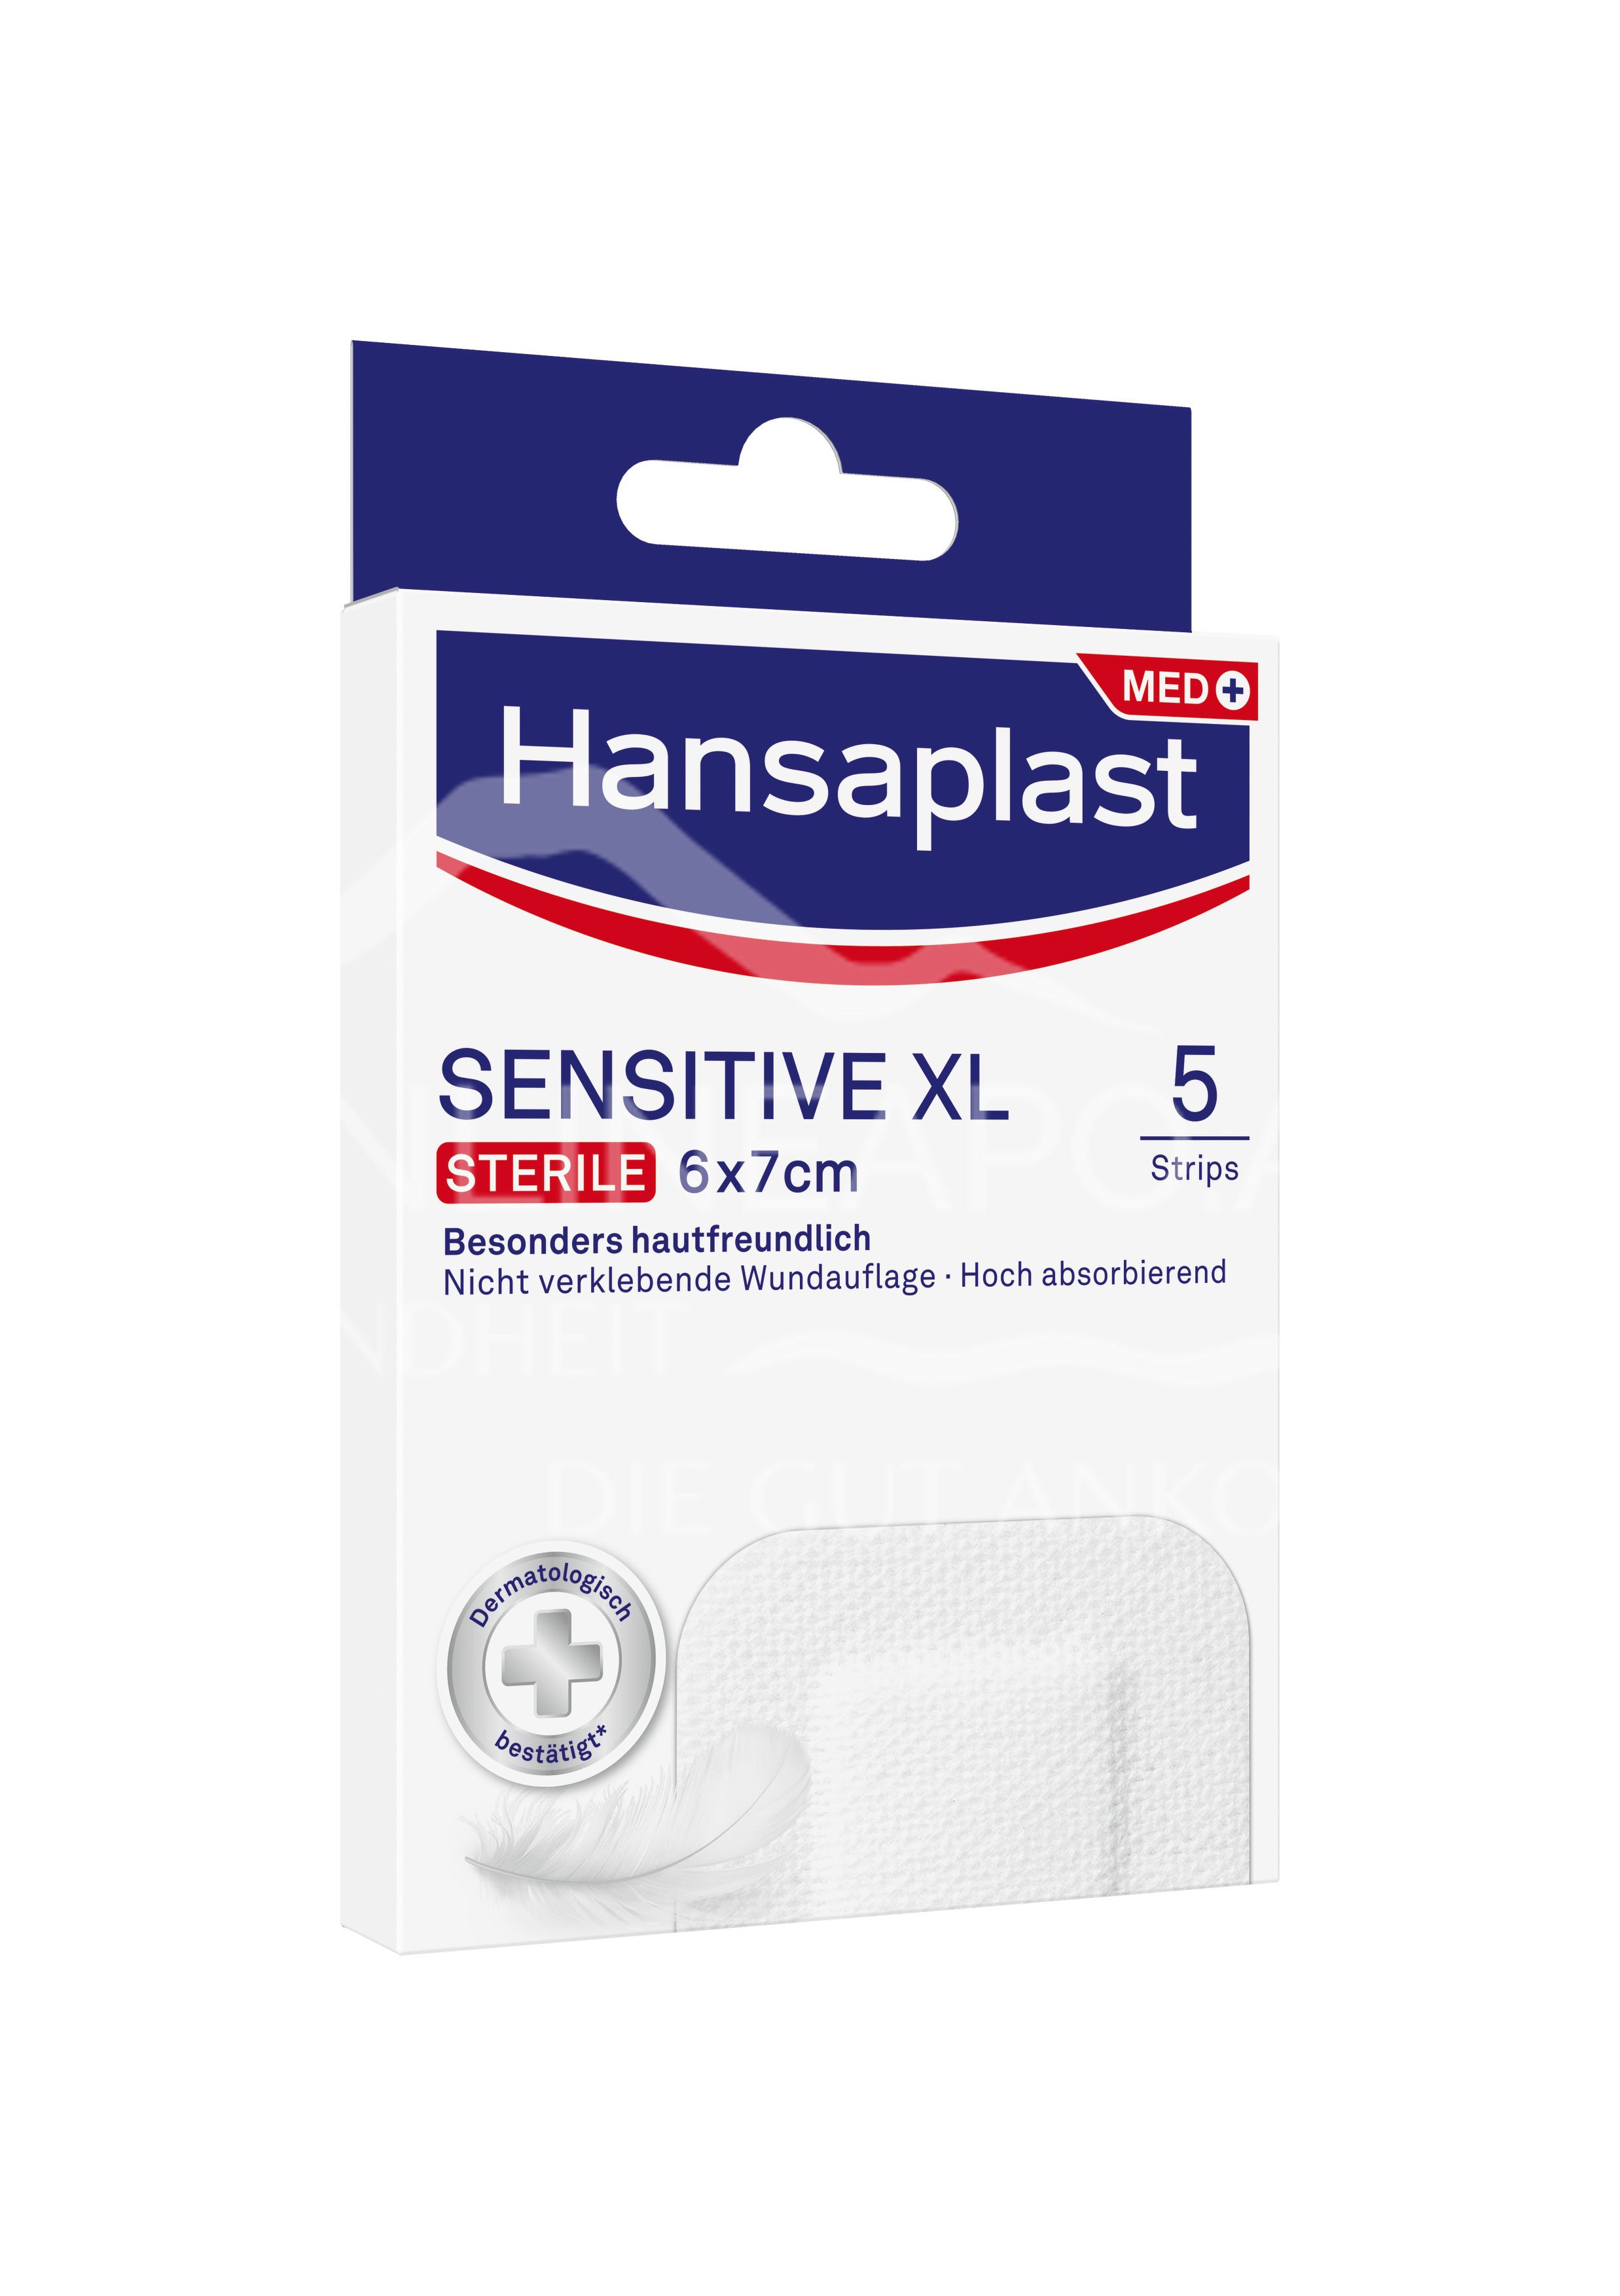 Hansaplast Sensitive XL Wundauflage Sterile 6 x 7cm